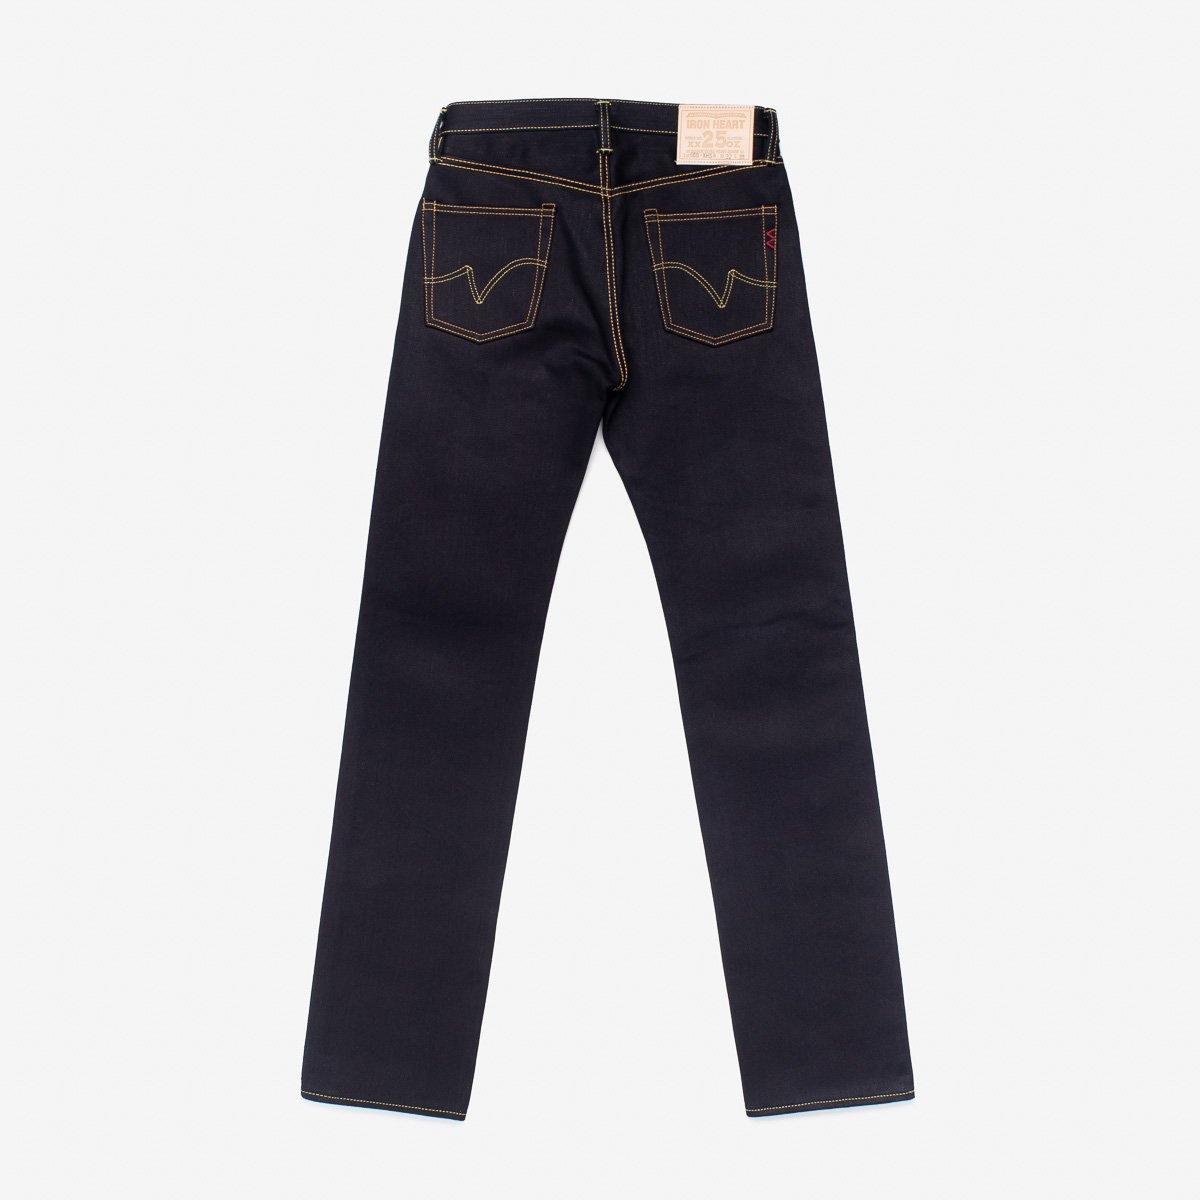 IH-666-XHSib 25oz Selvedge Denim Slim Straight Cut Jeans - Indigo/Black - 5